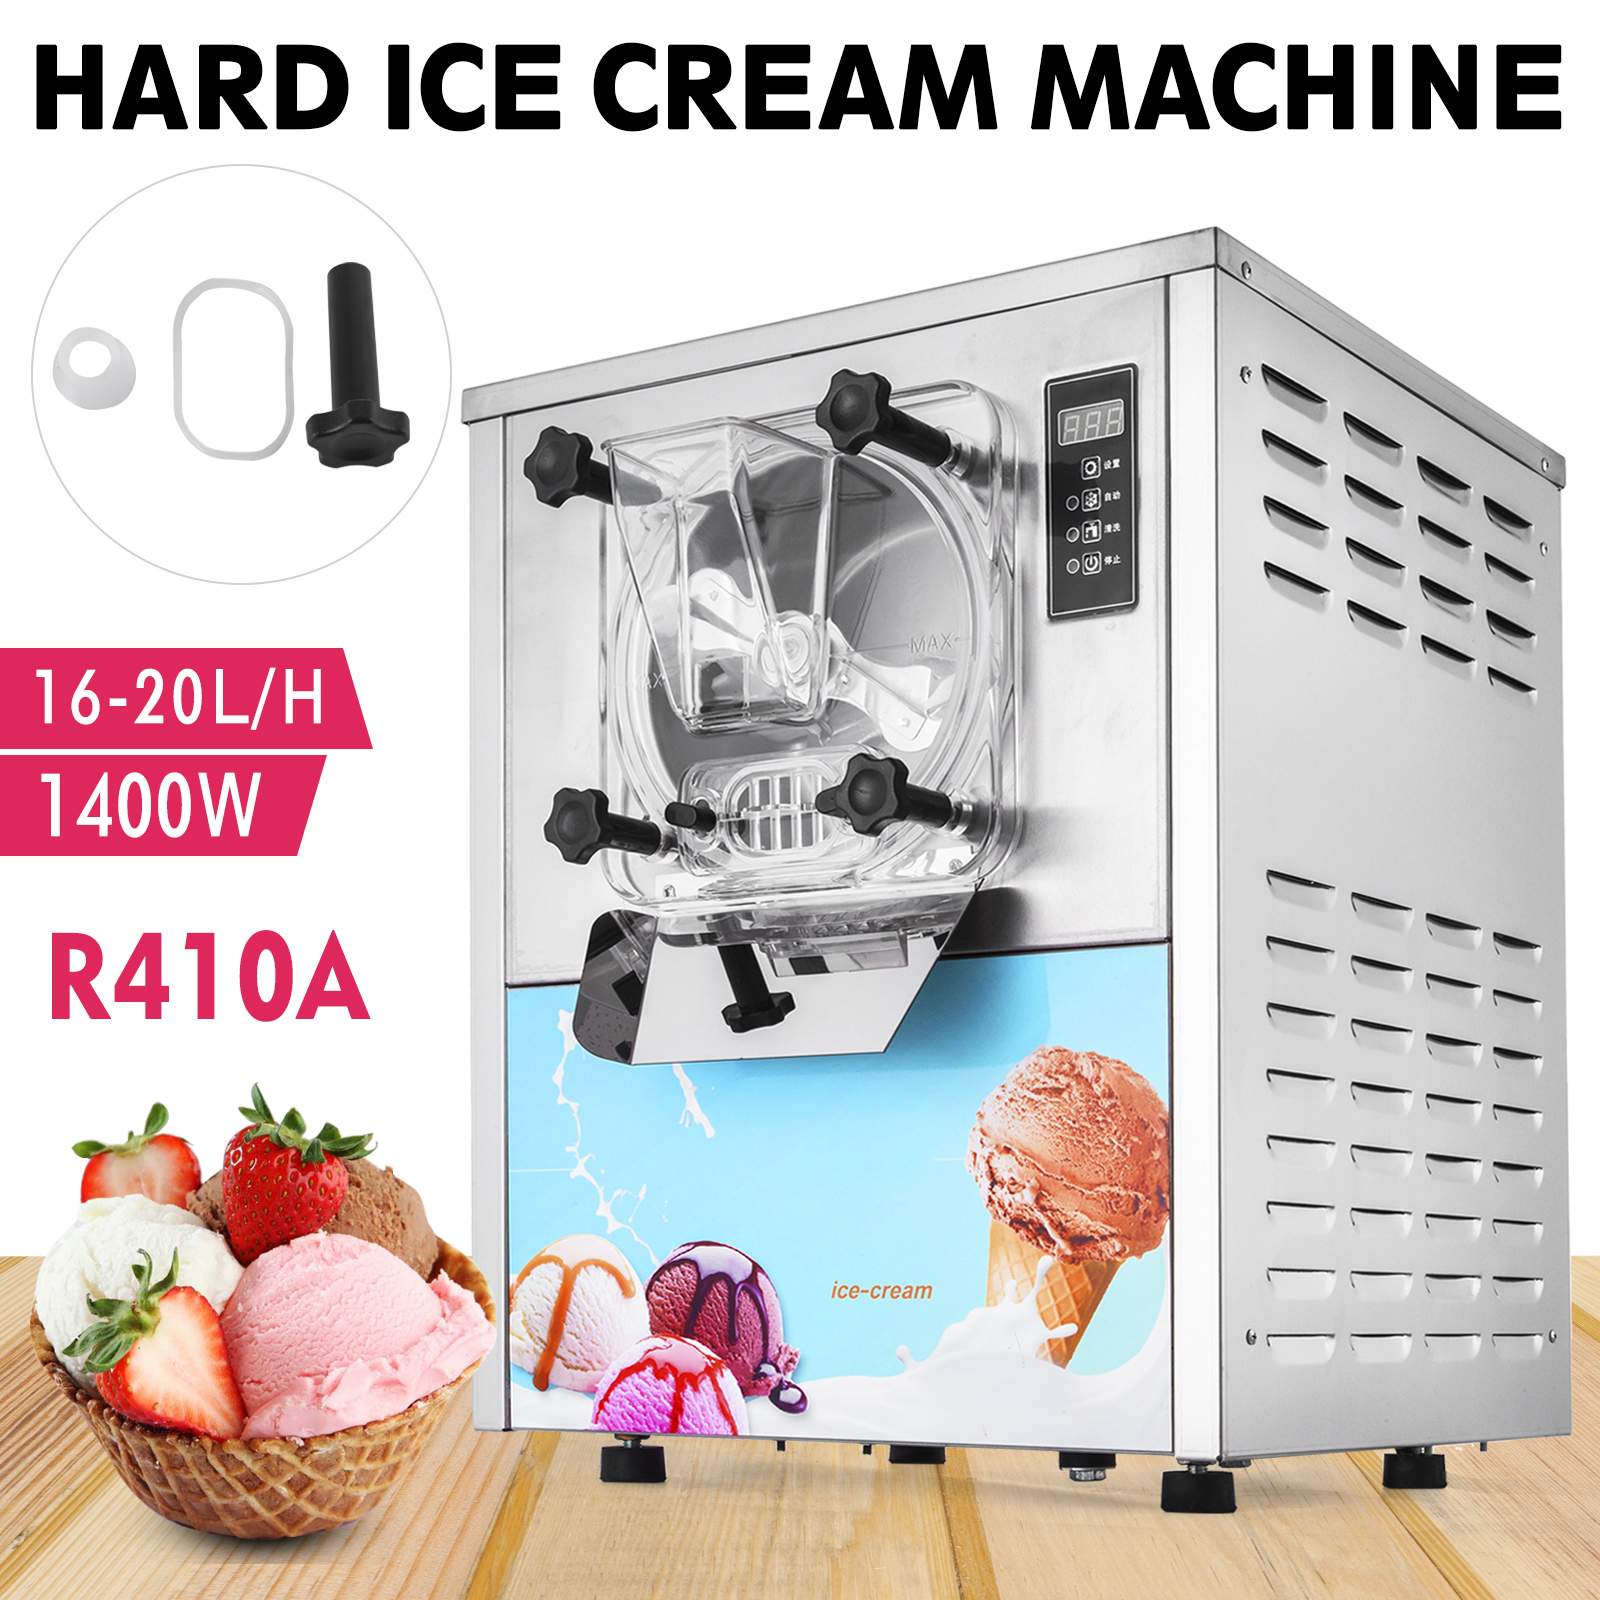 hard ice cream machine, stainless steel, 20L/H